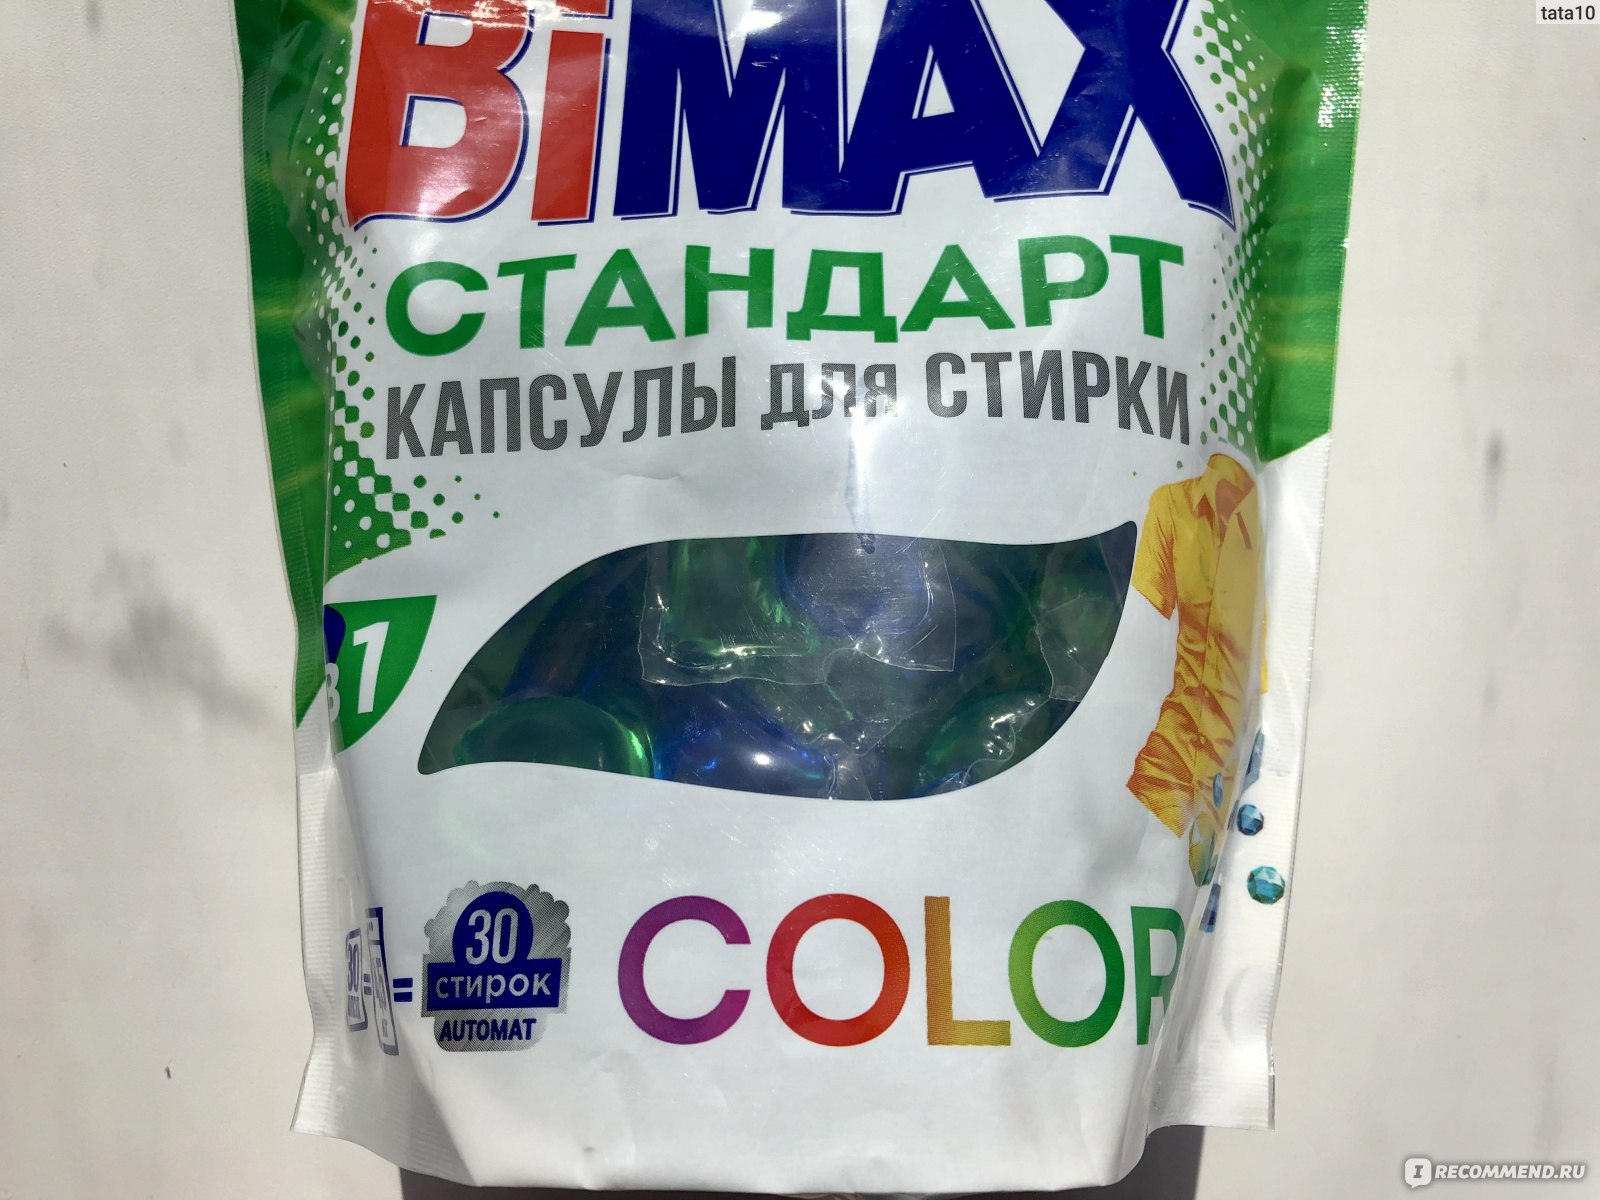 Капсулы для стирки BiMax Стандарт 4 в 1 (30 капсул) Color фото